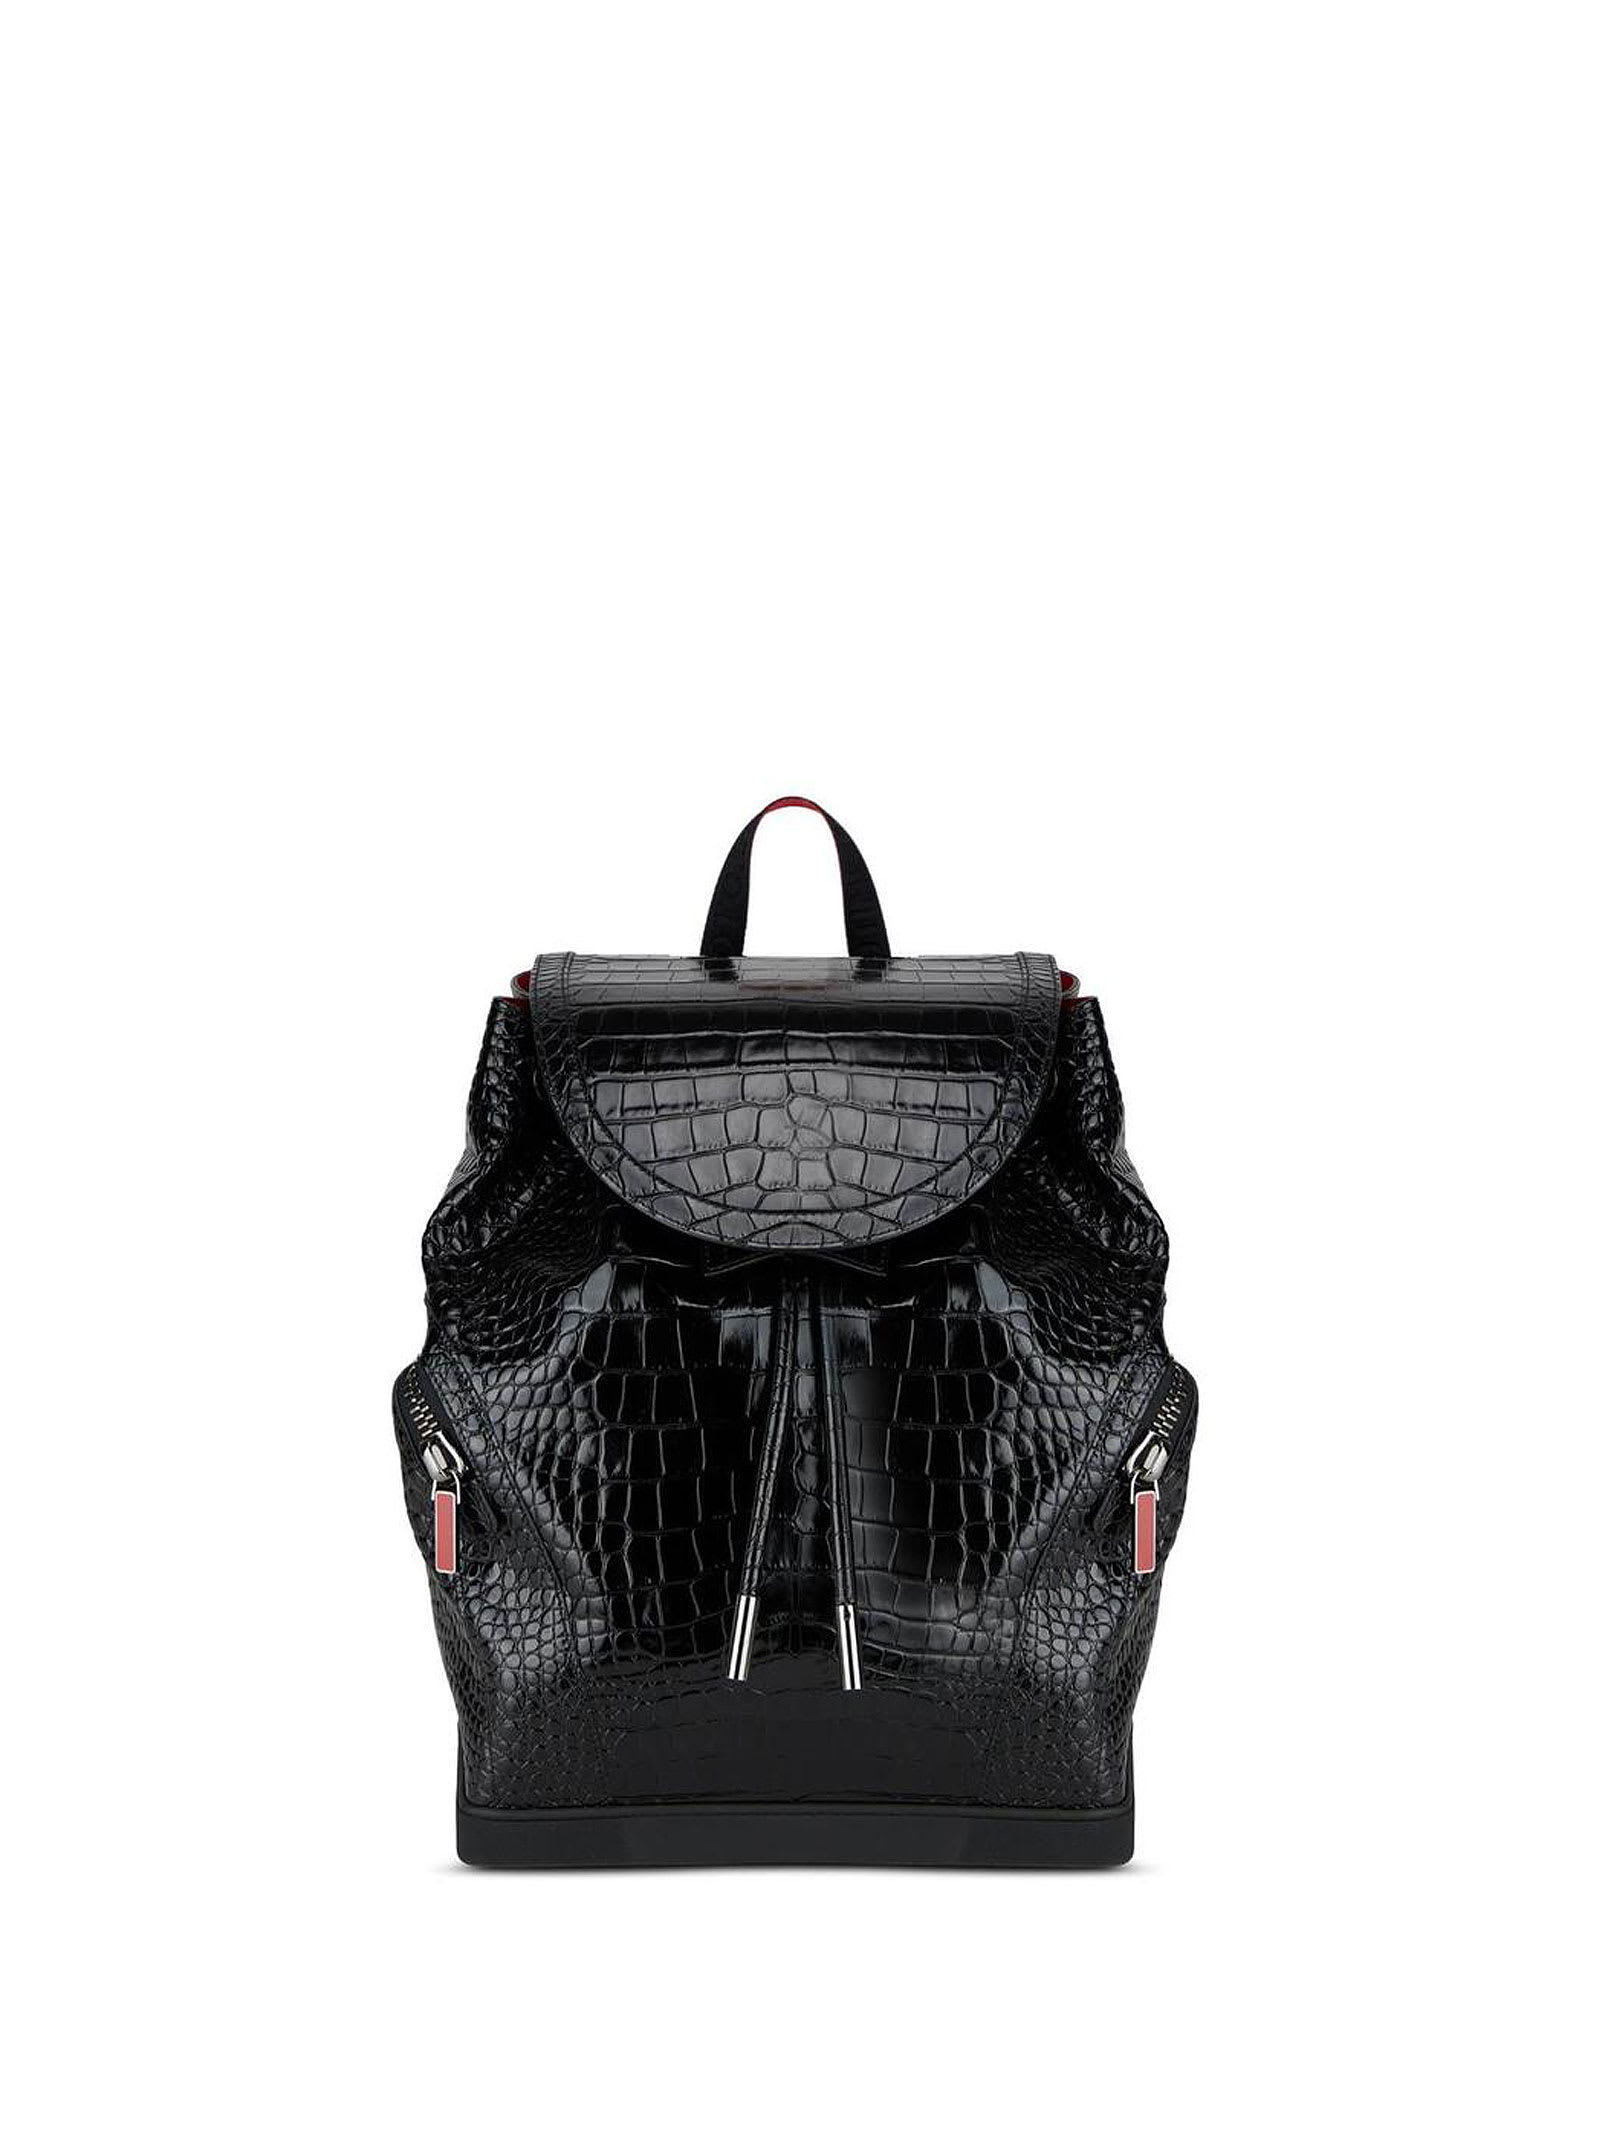 Christian Louboutin Alligator Print Backpack In Black Black